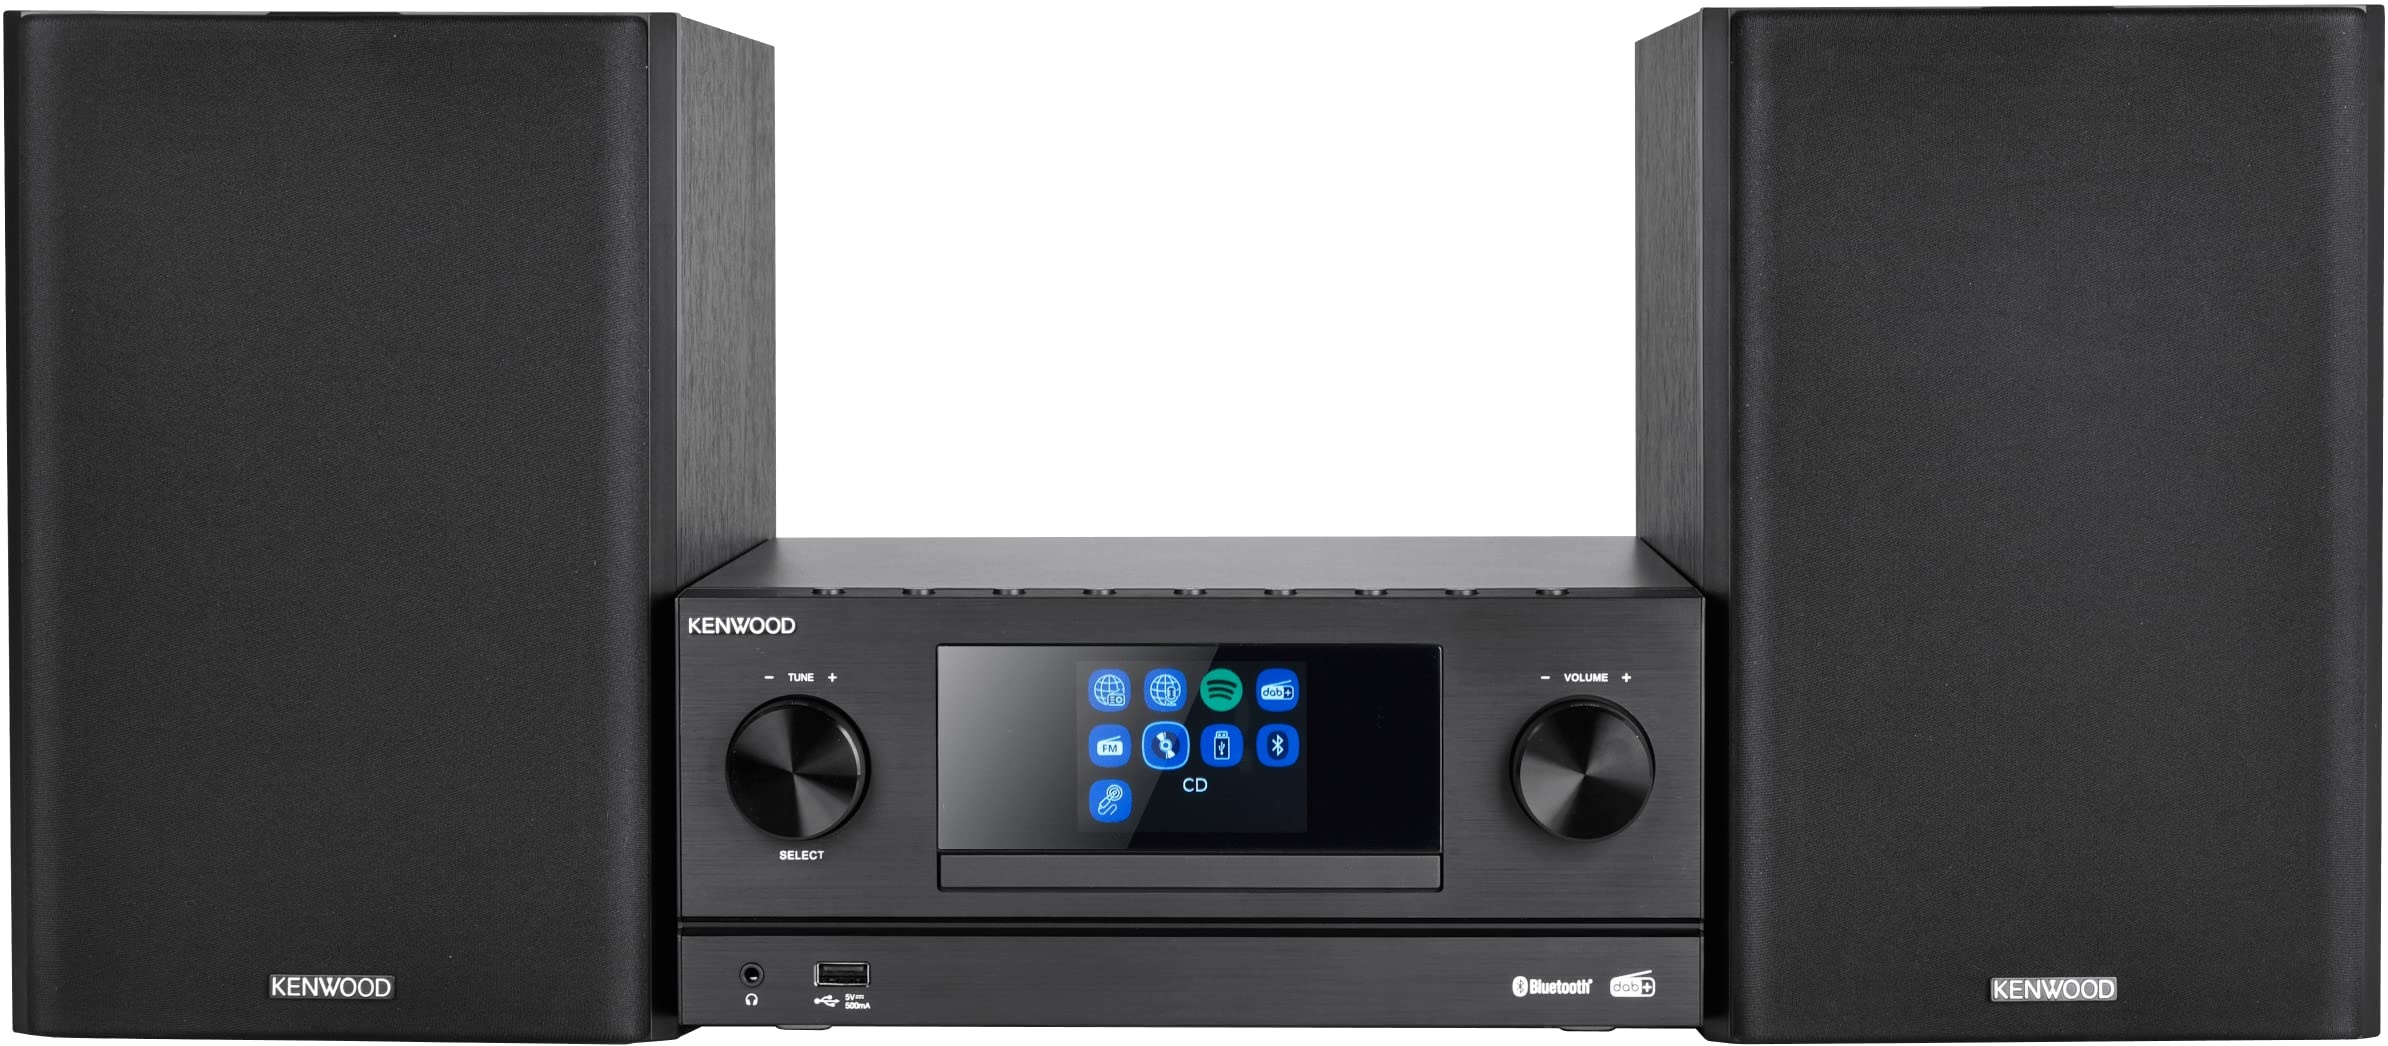 Kenwood M-9000S-B - Smart Micro Hi-Fi System mit Internetradio, DAB+, CD/USB und Audiostreaming, Farbe Schwarz